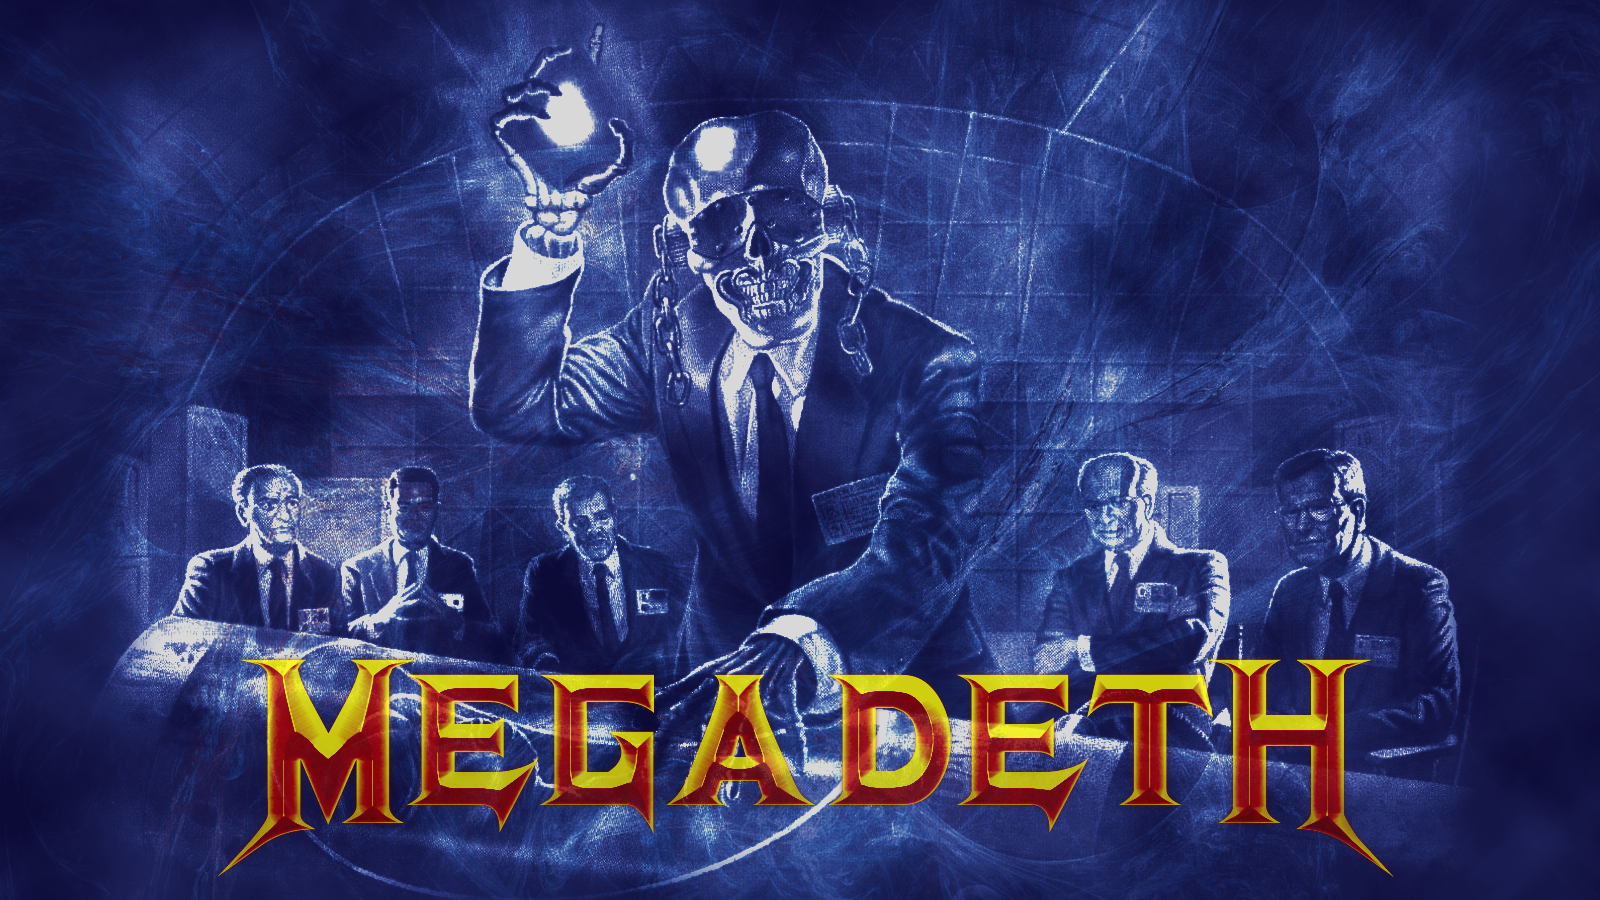 Megadeth Computer Wallpapers, Desktop Backgrounds | 1600x900 | ID ...